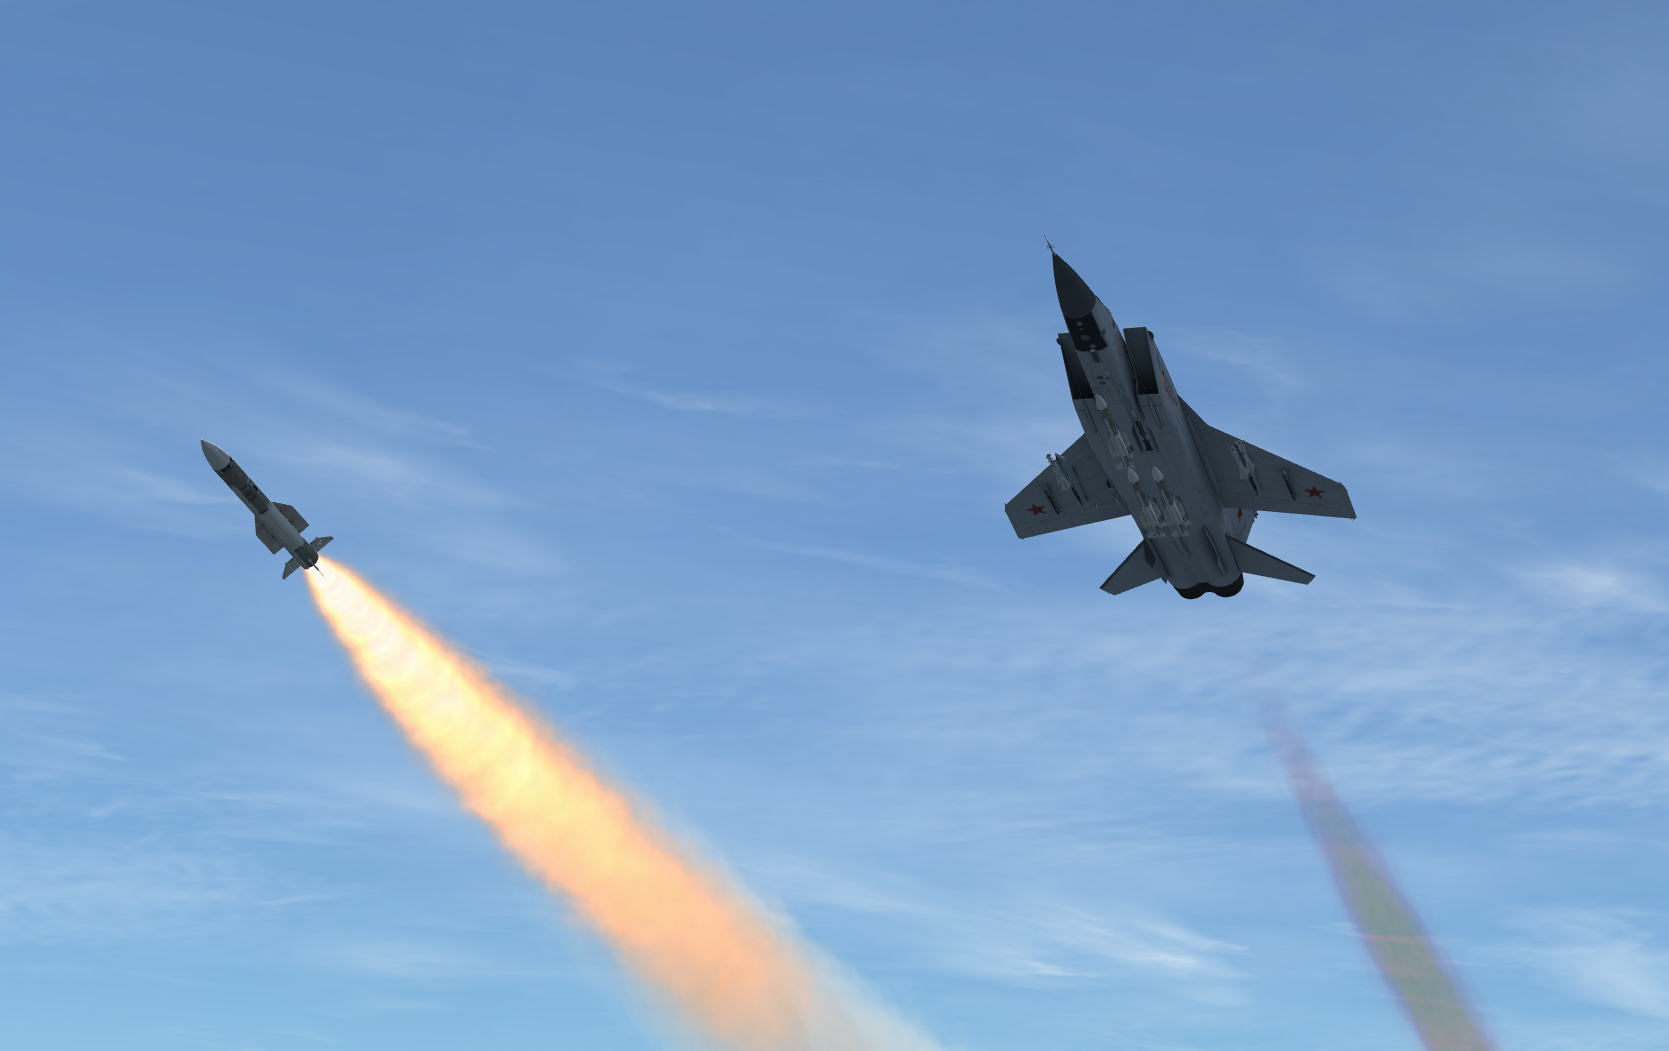 Р37м ракета. Р-37 ракета «воздух-воздух». Р-33 ракета воздух-воздух. Миг 31 пуск ракеты. Су-35 с ракетами р-37м.